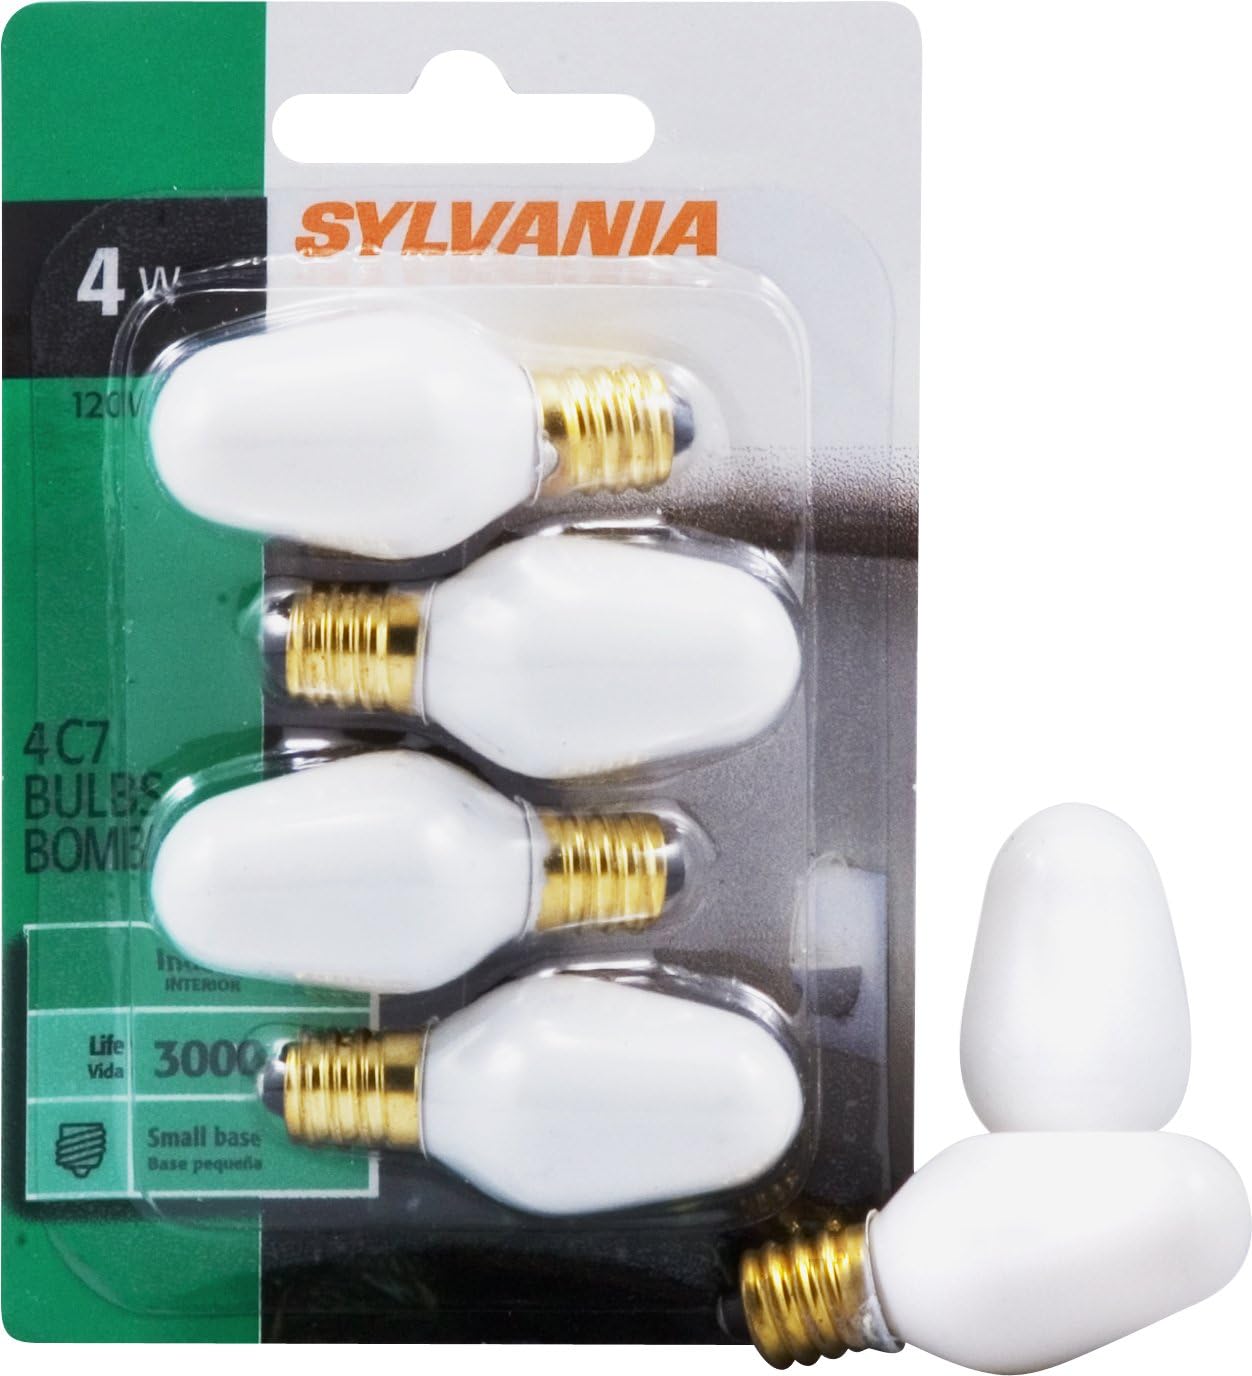 SYLVANIA Incandescent 4W C7 Night Light Bulb